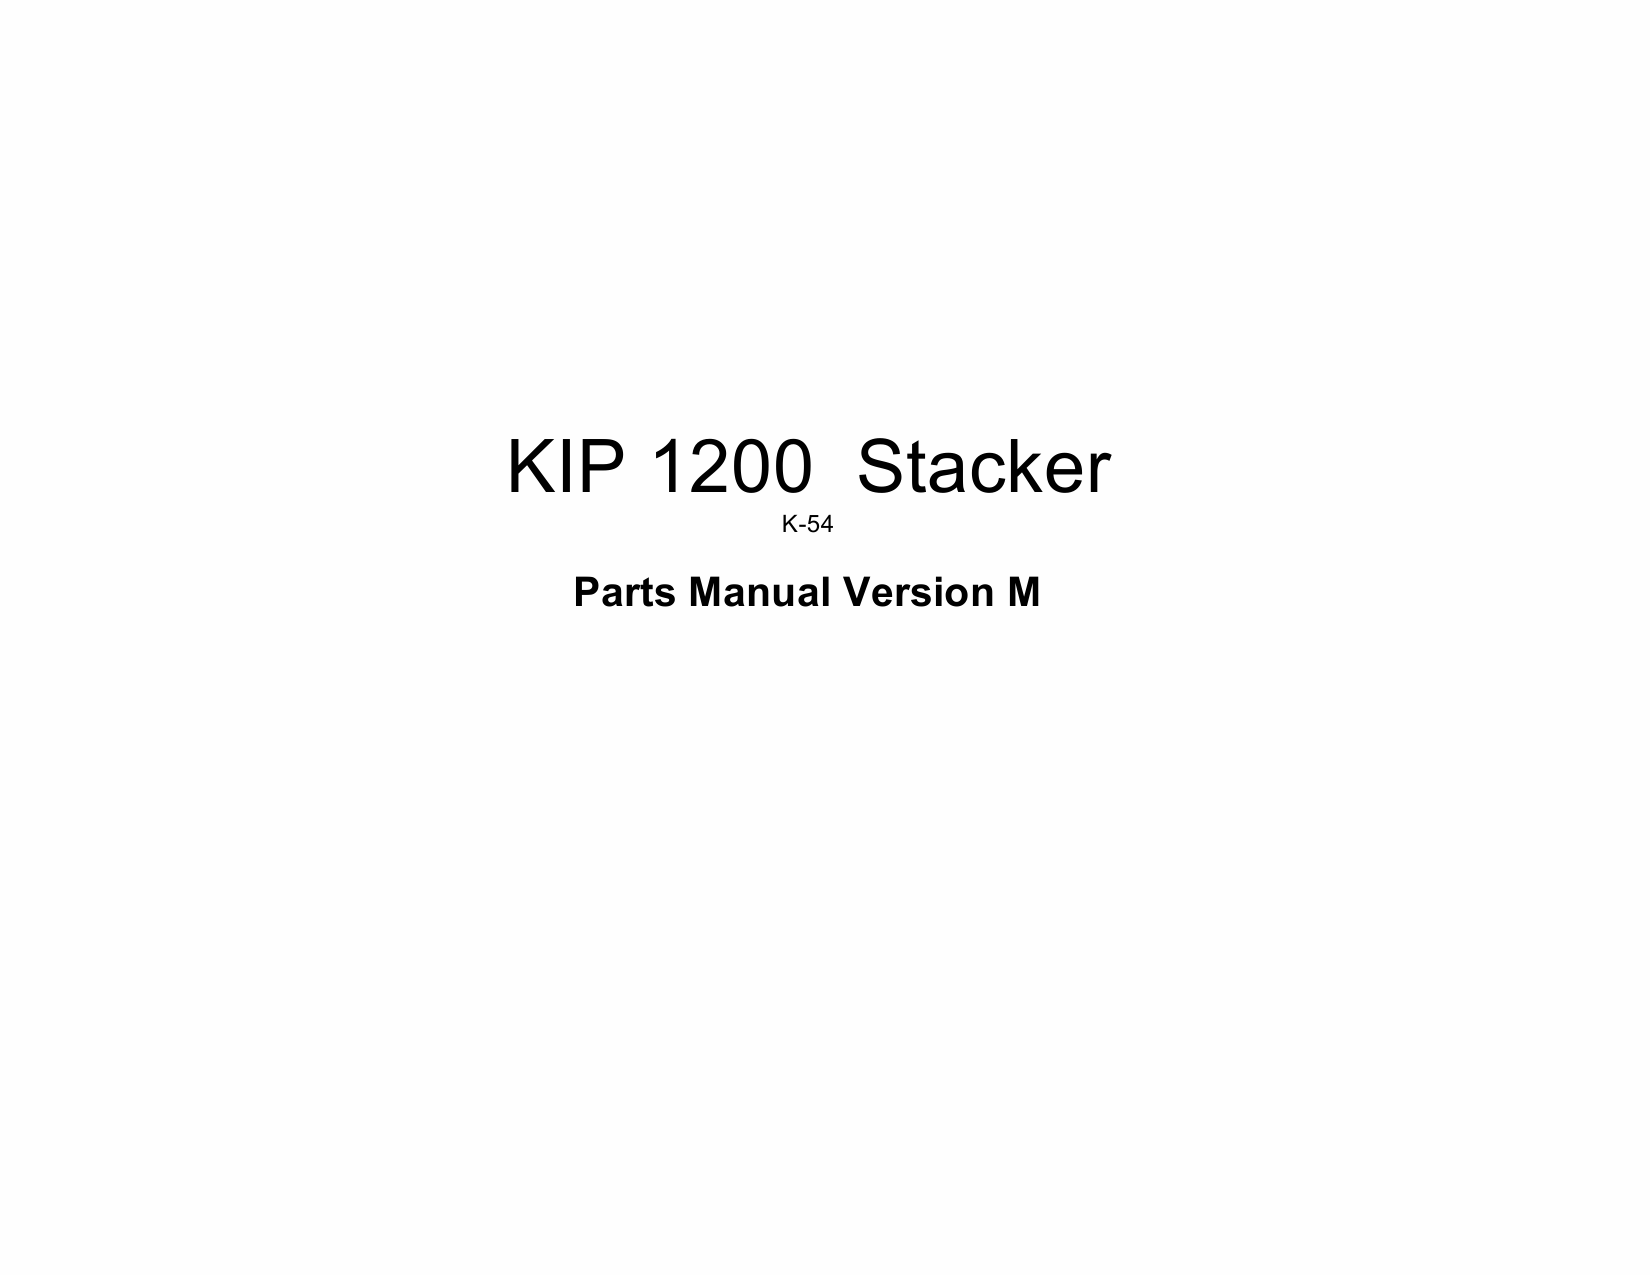 KIP 1200 K-54 Auto-Stacker Parts and Service Manual-4